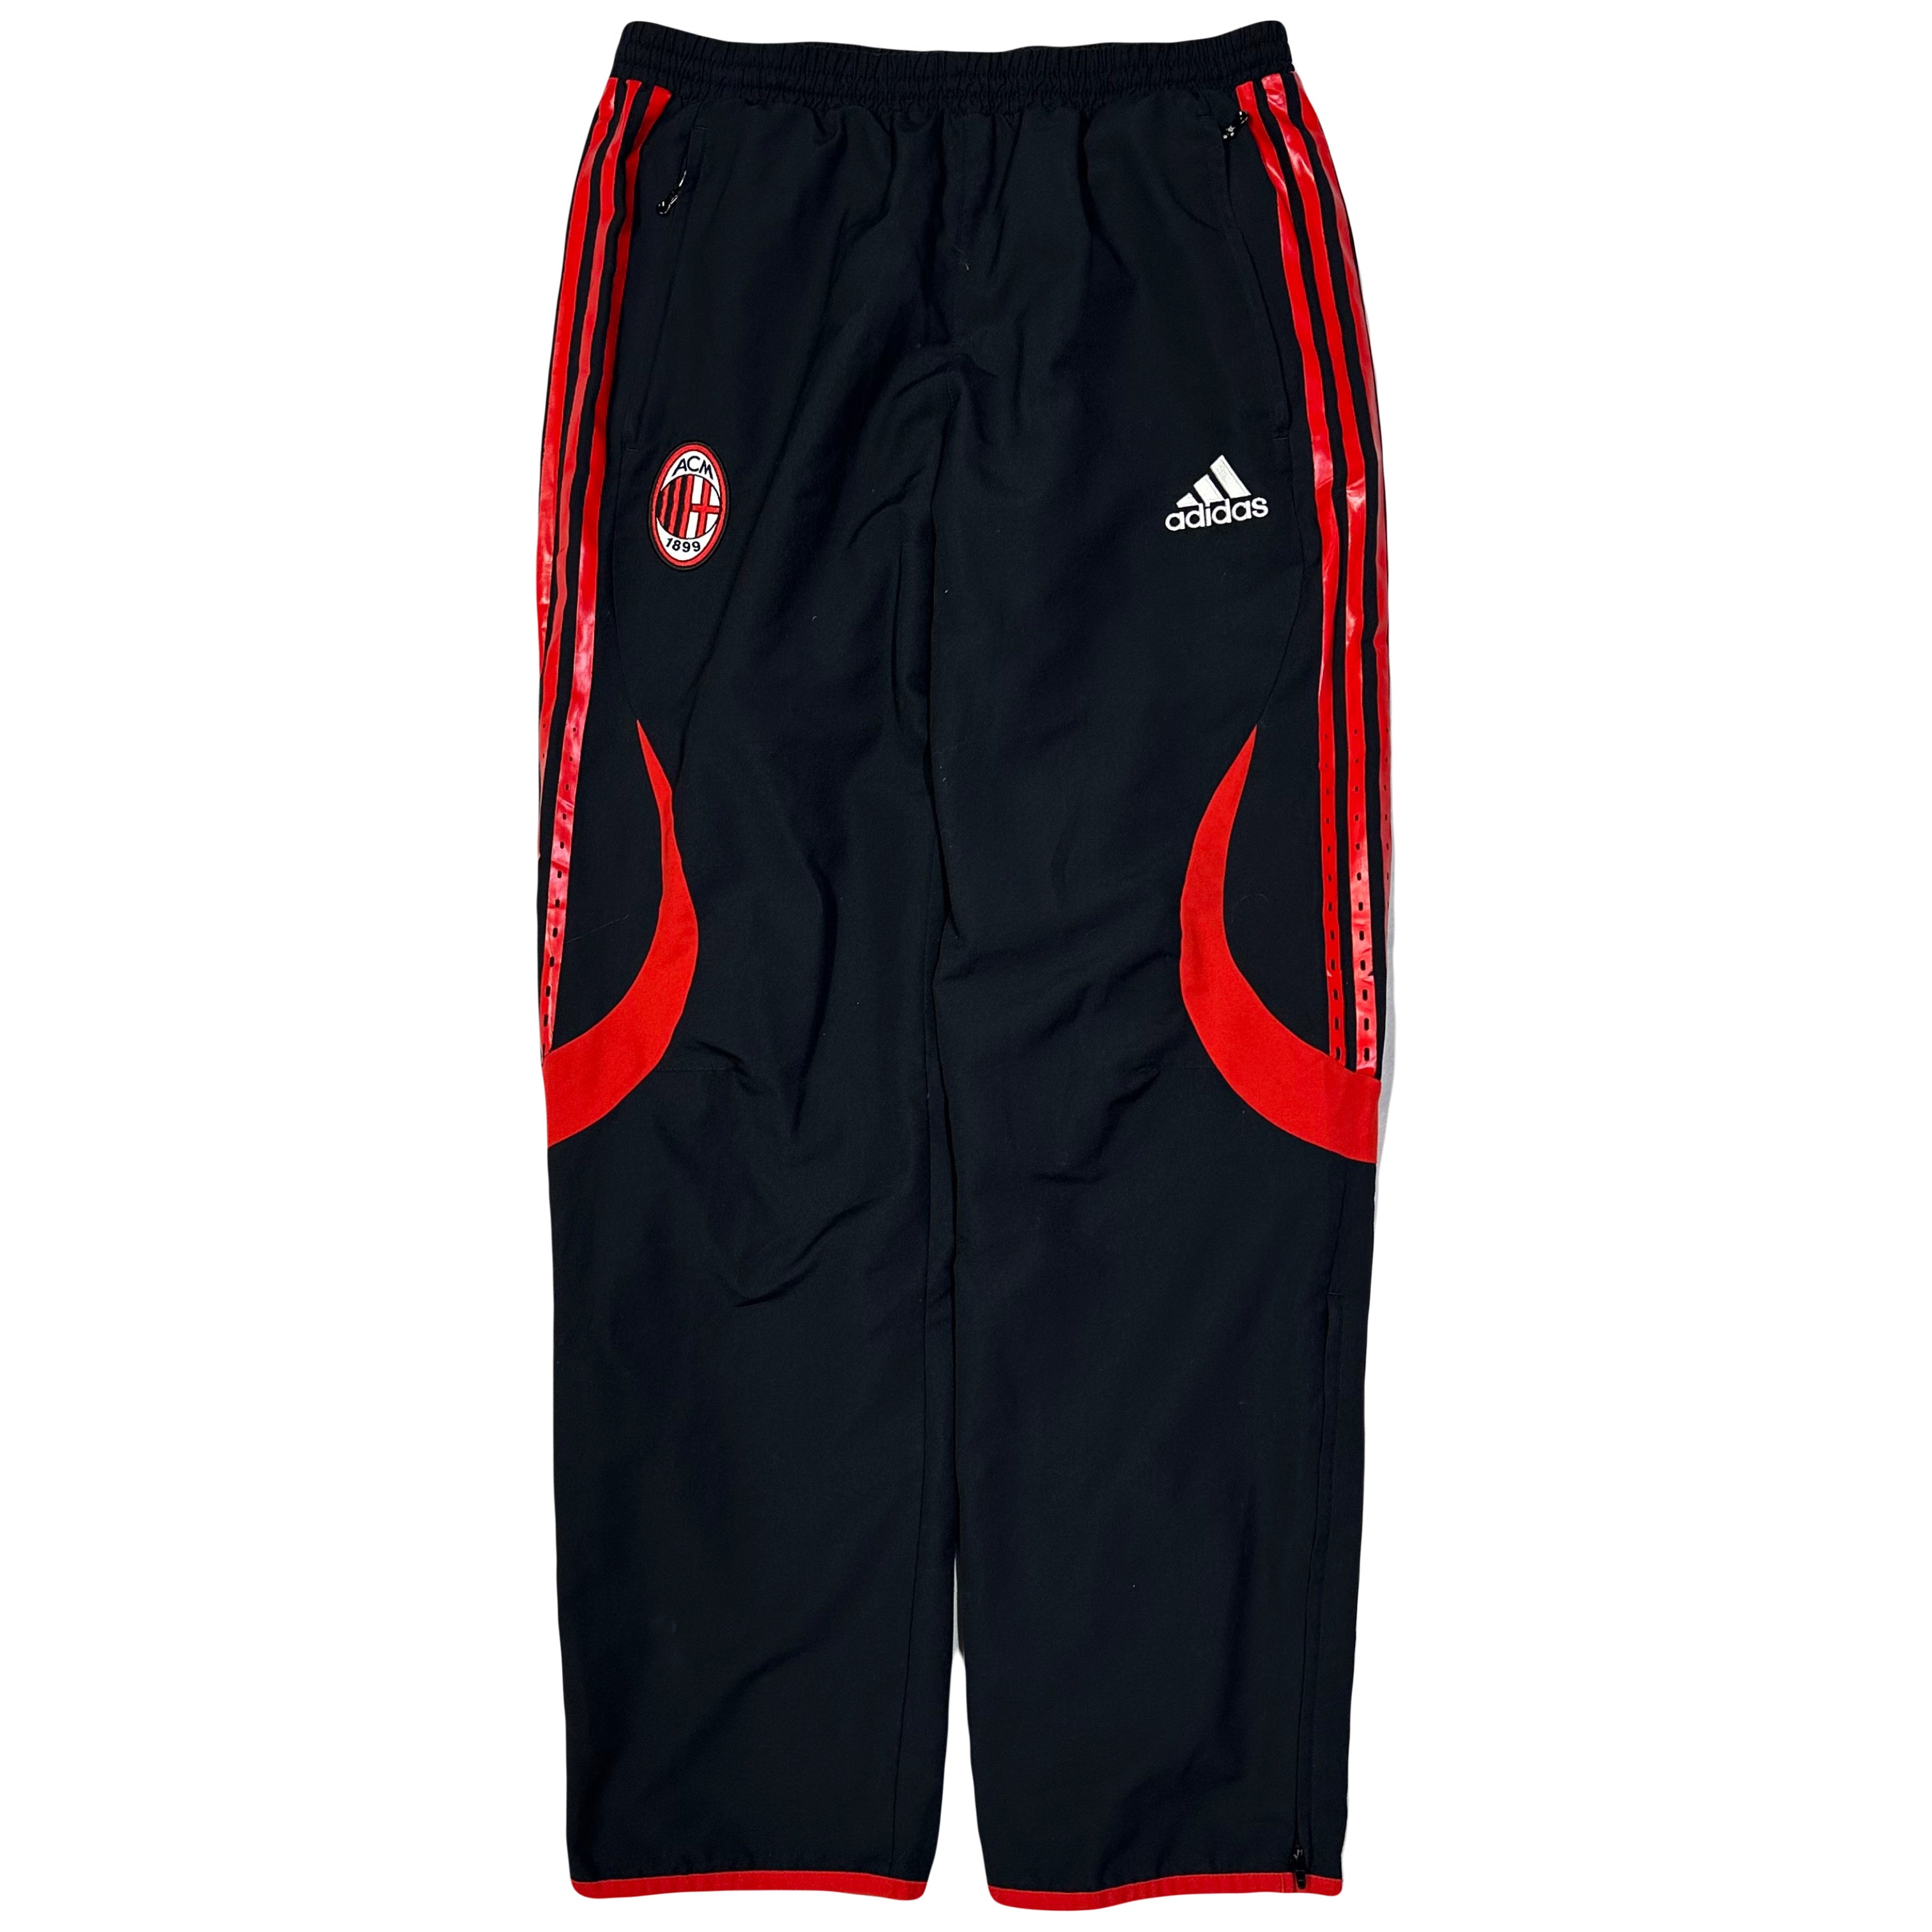 Adidas AC Milan 2005/06 Tracksuit Bottoms In Black & Red ( M )